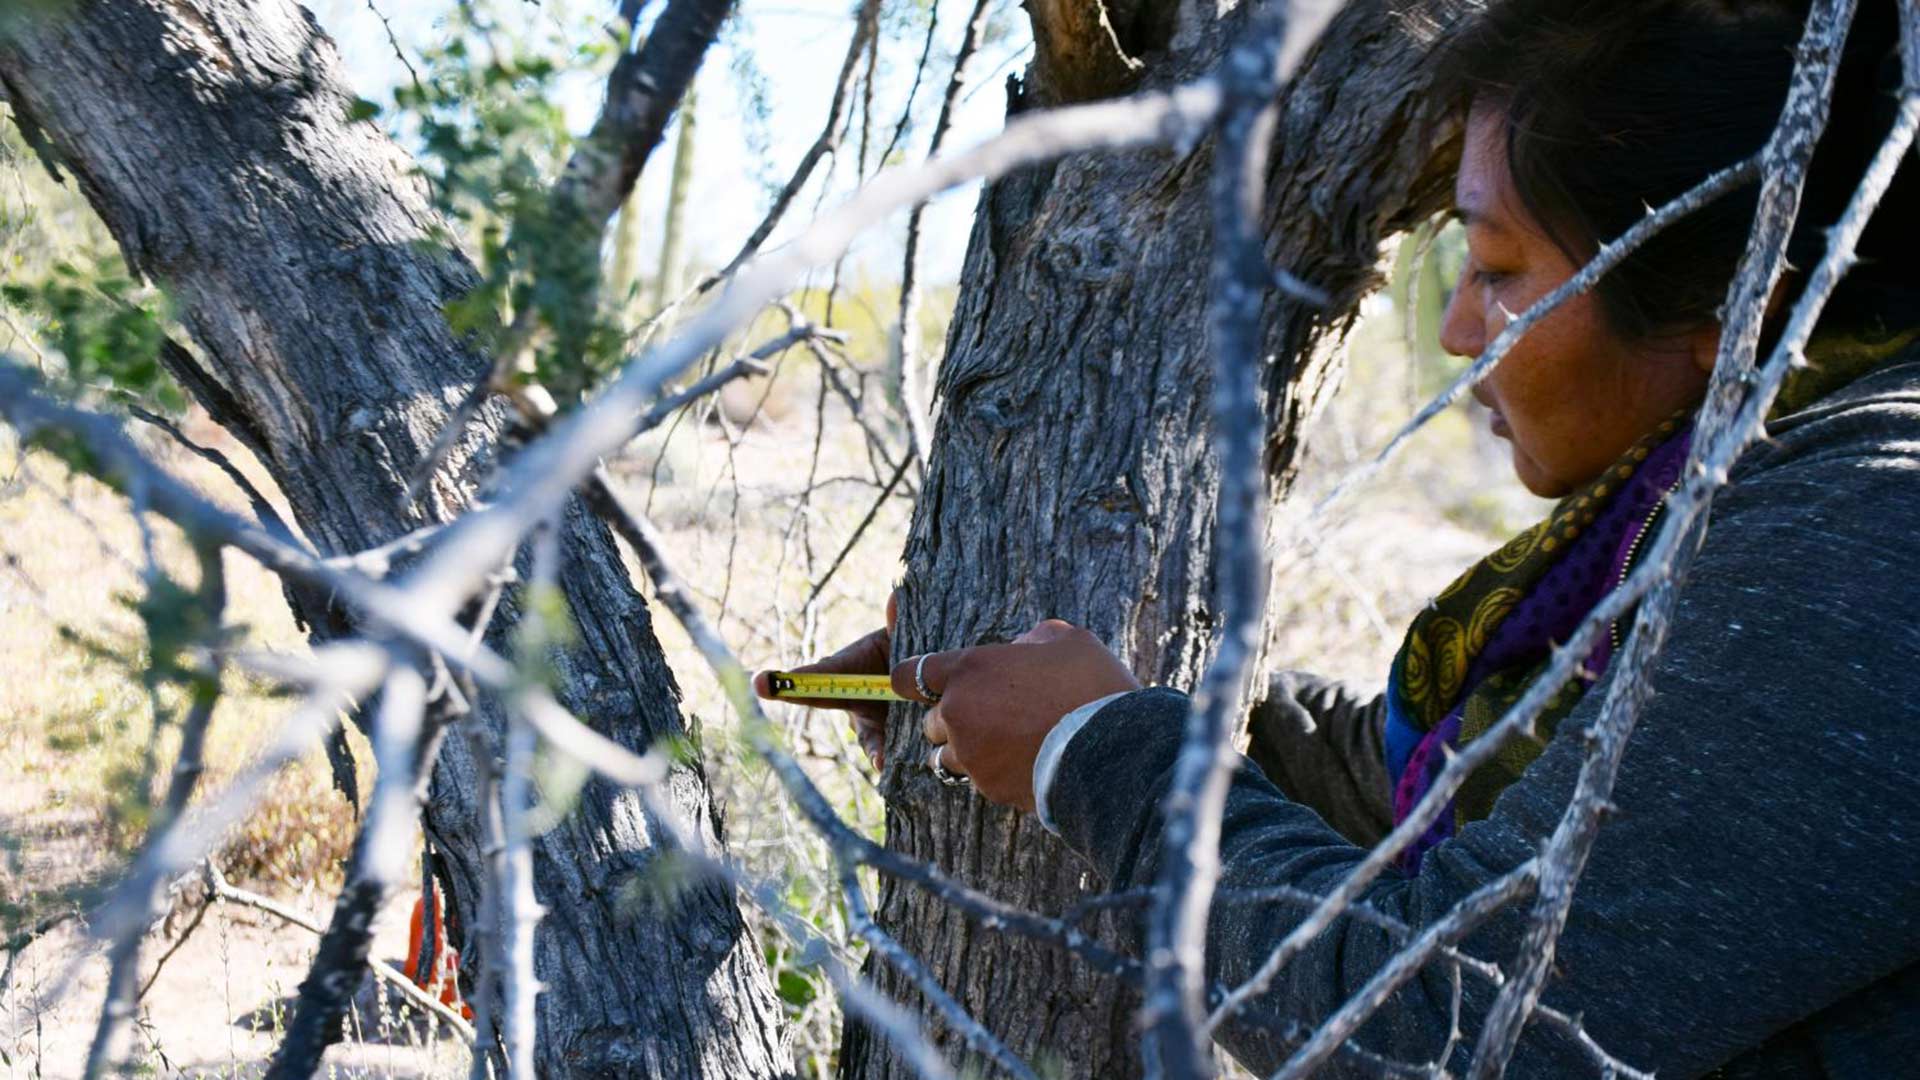 Mayra Estrella, project leader, measures a tree during the habitat conservation study in El Desemboque